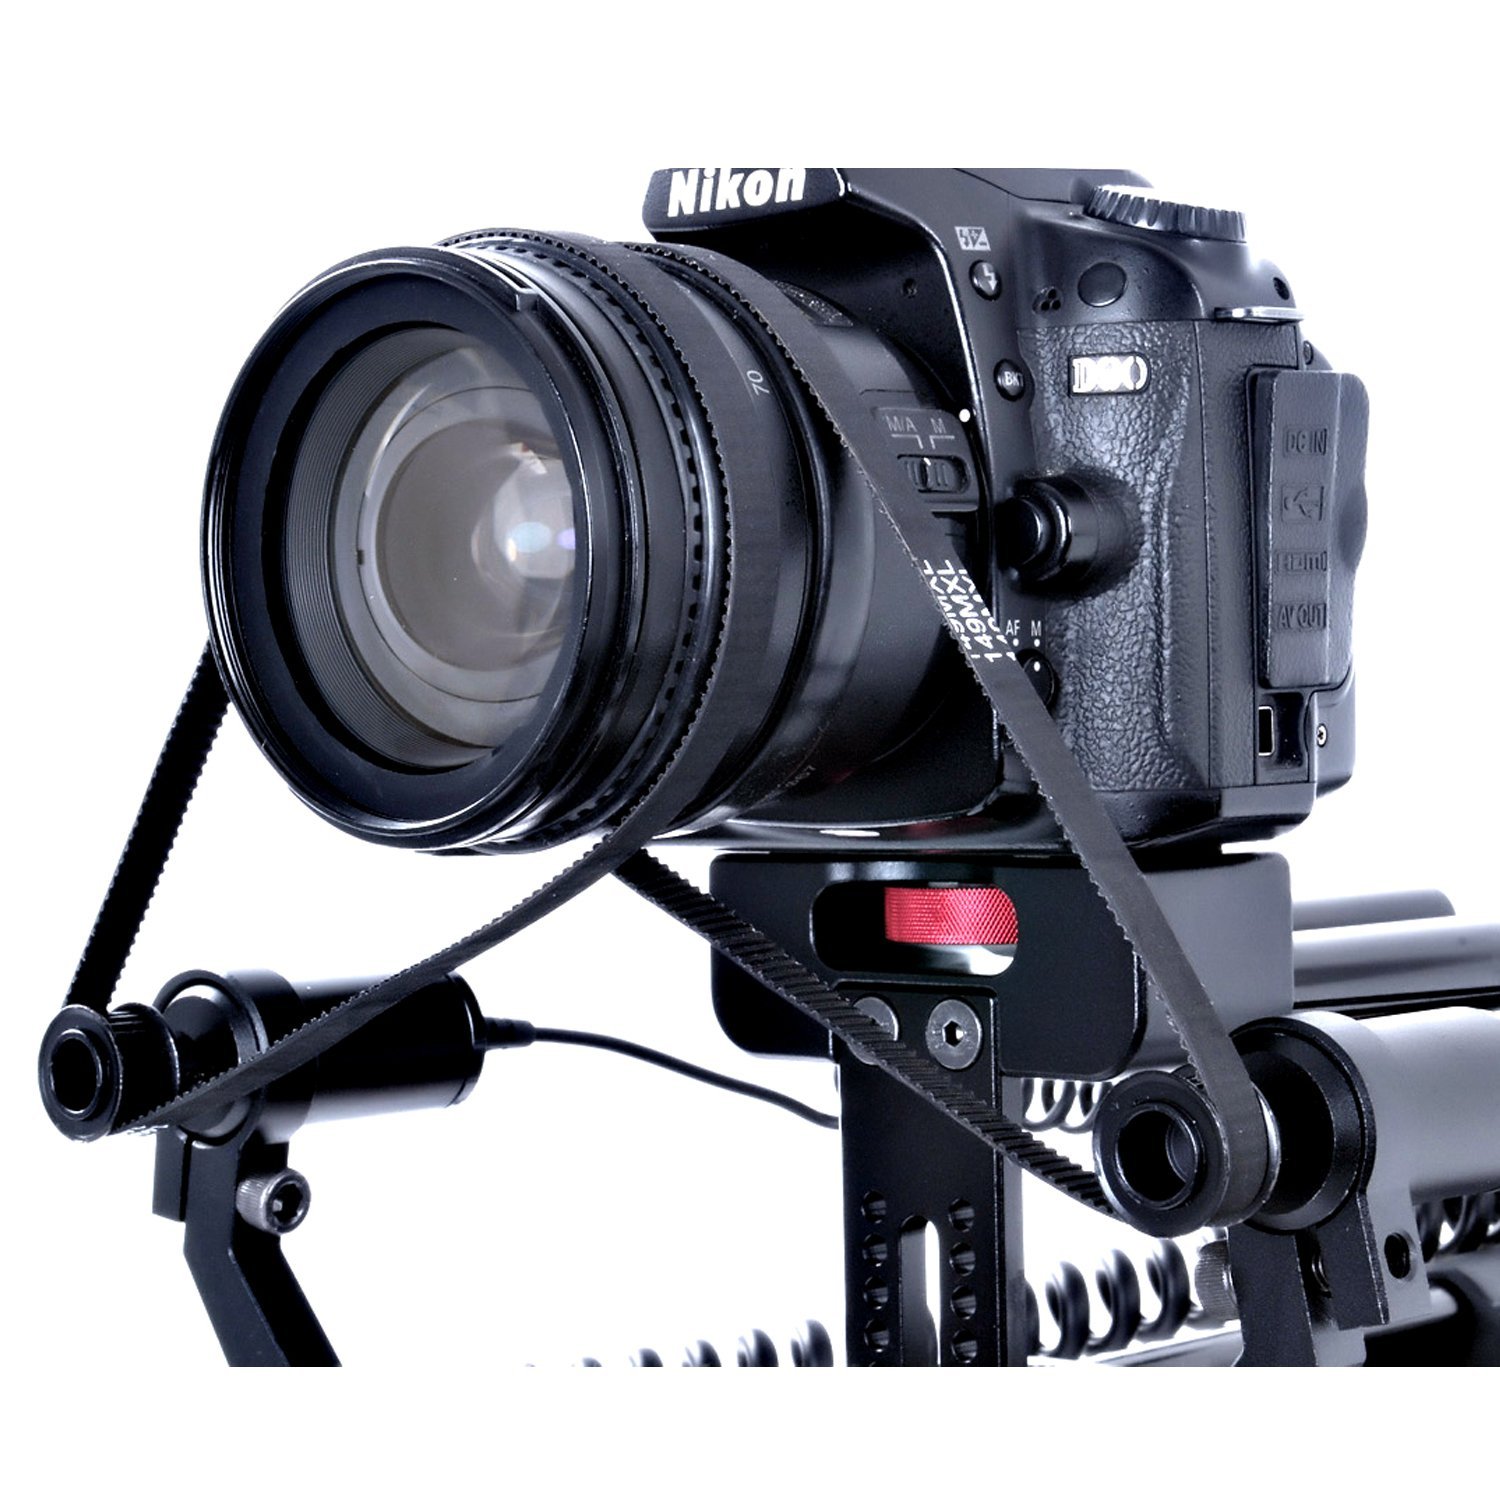 Movo MMF300 Motorized Follow Focus & Zoom Control Video Shoulder DSLR